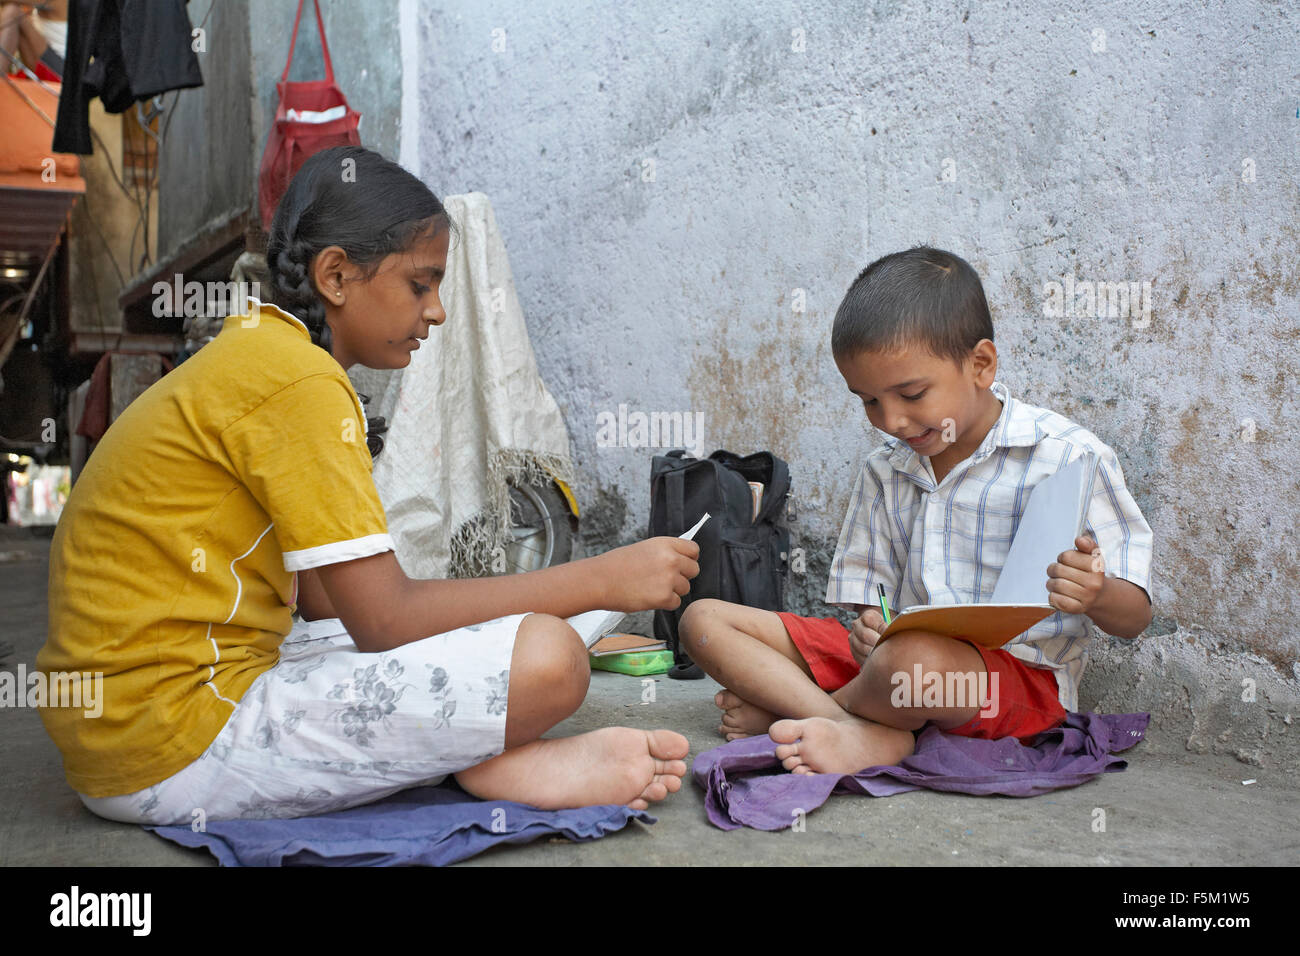 Children studying in cramped open space, mumbai, maharashtra, india, asia Stock Photo